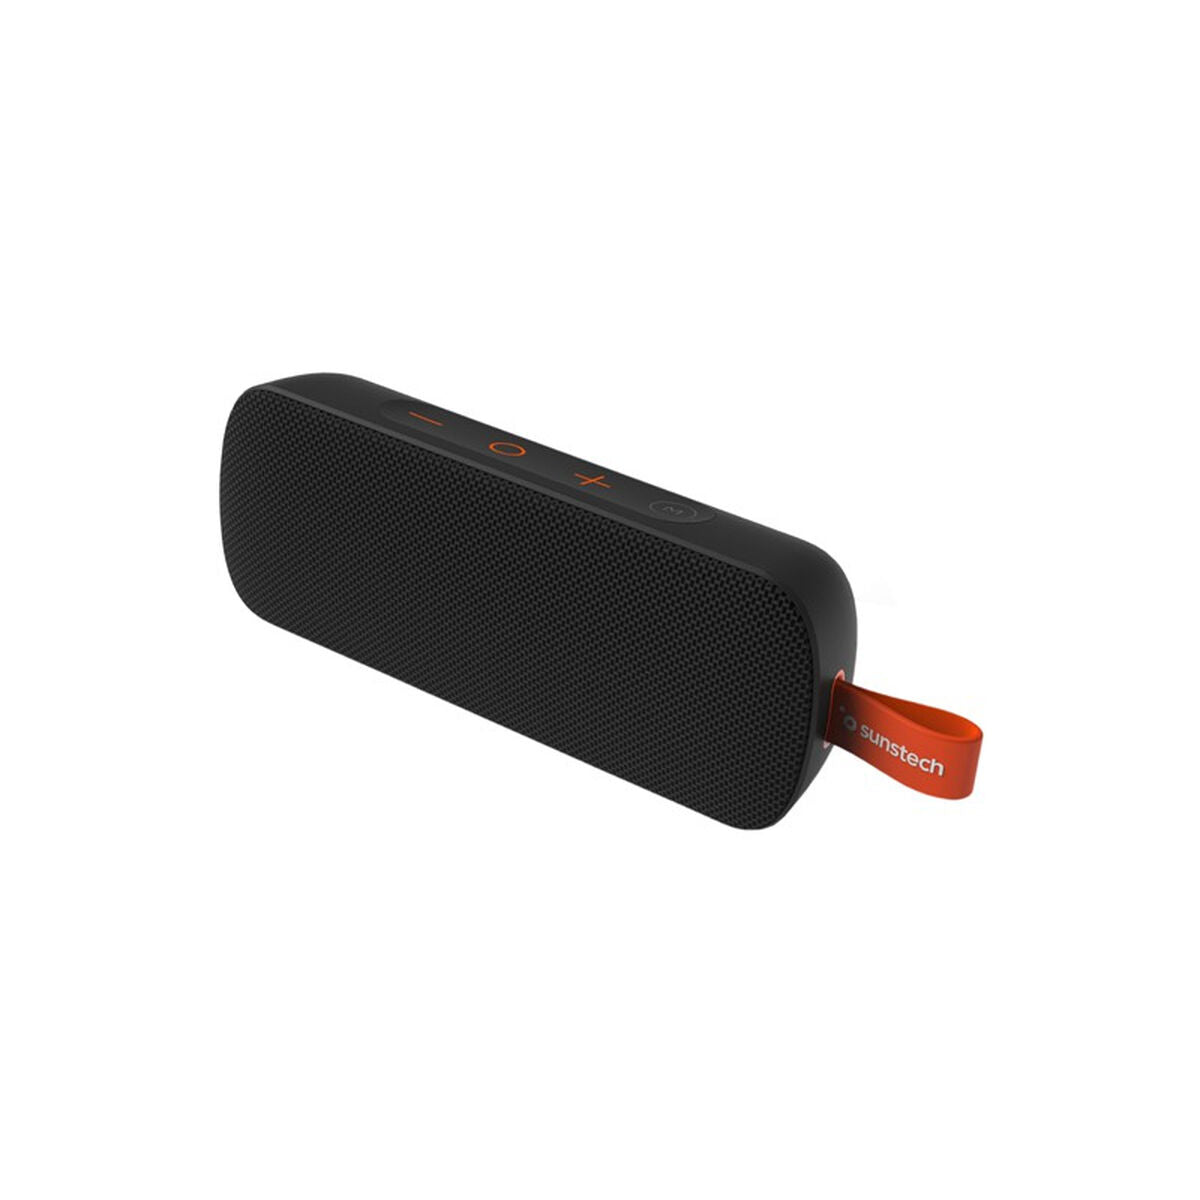 Portable Bluetooth Speakers Sunstech BRICKLARGEBK Black 2100 W 10 W